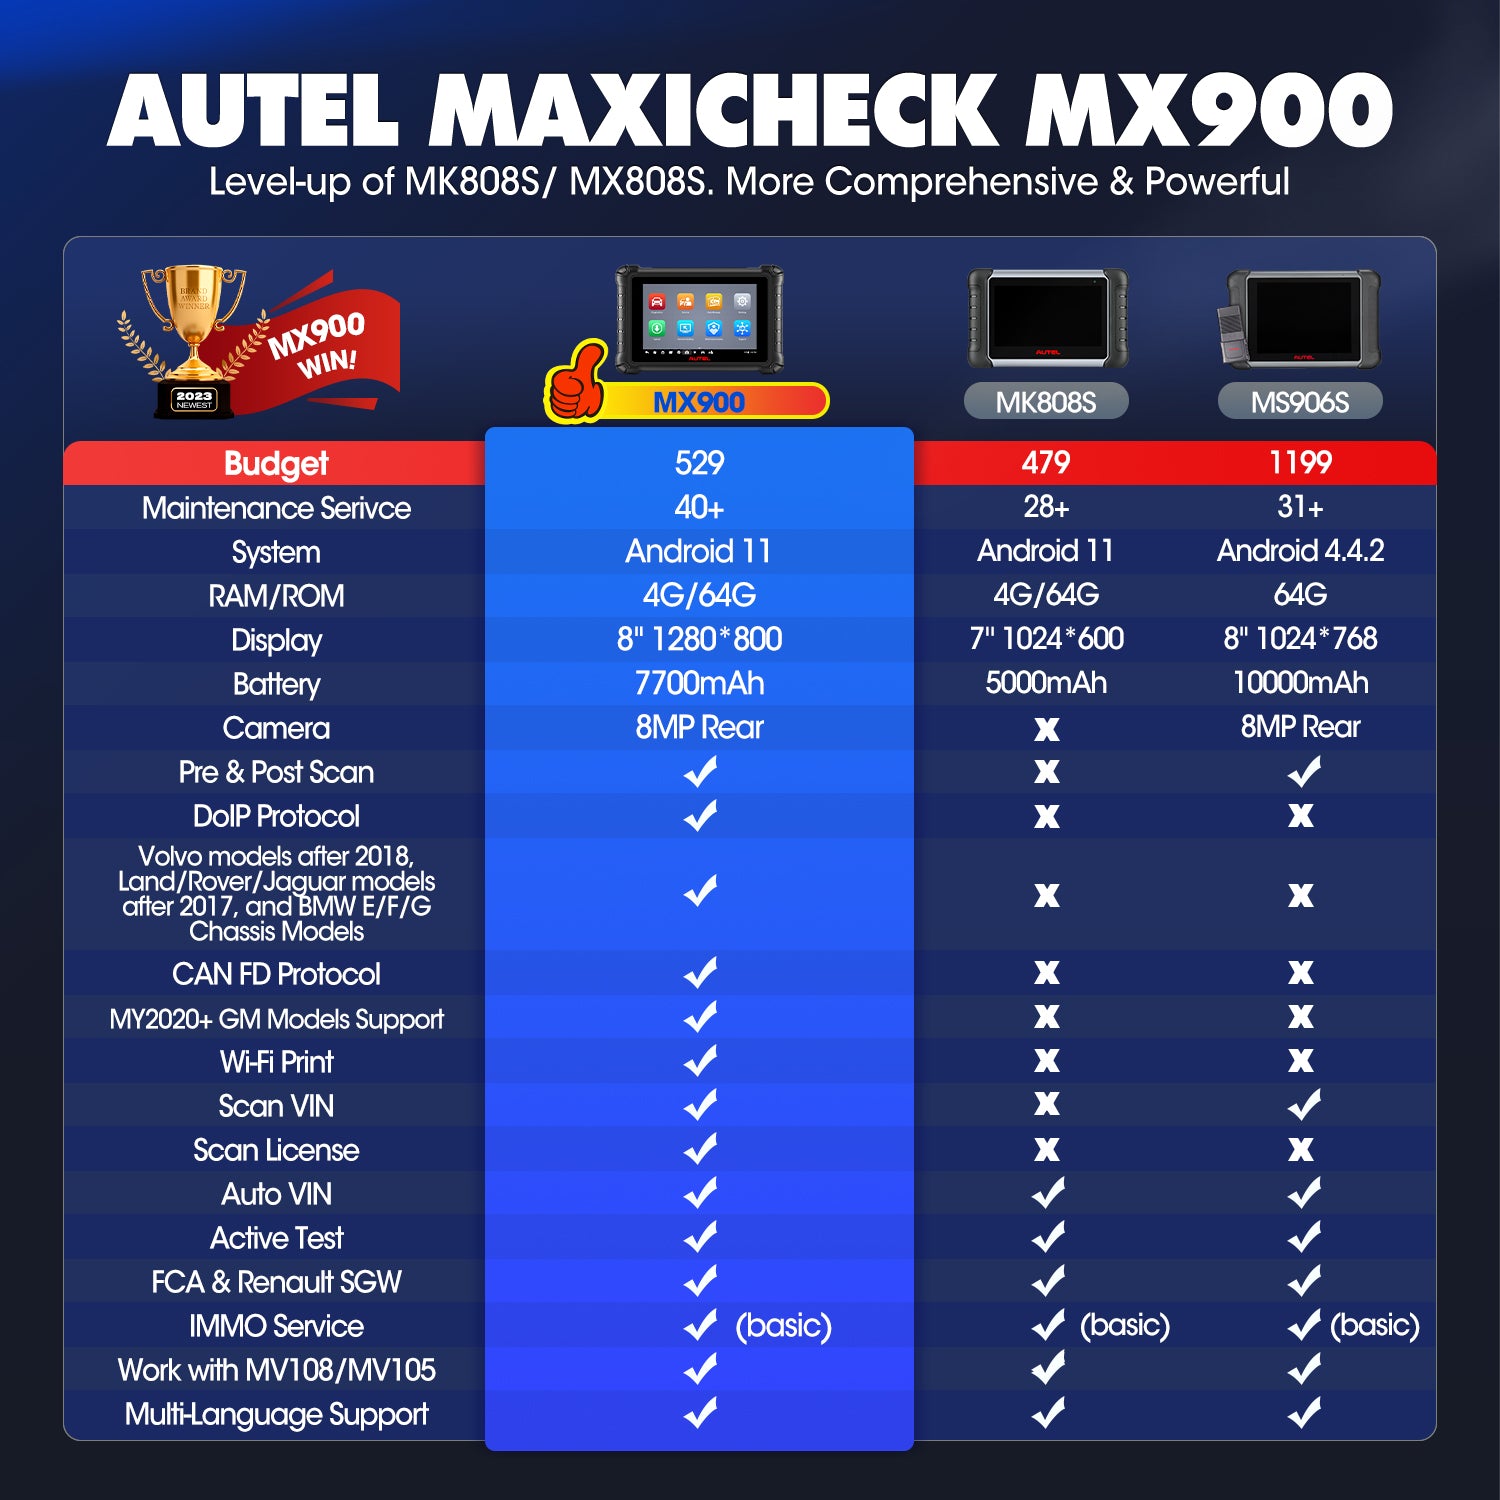 Autel MaxiCheck MX900 Comparison Chart